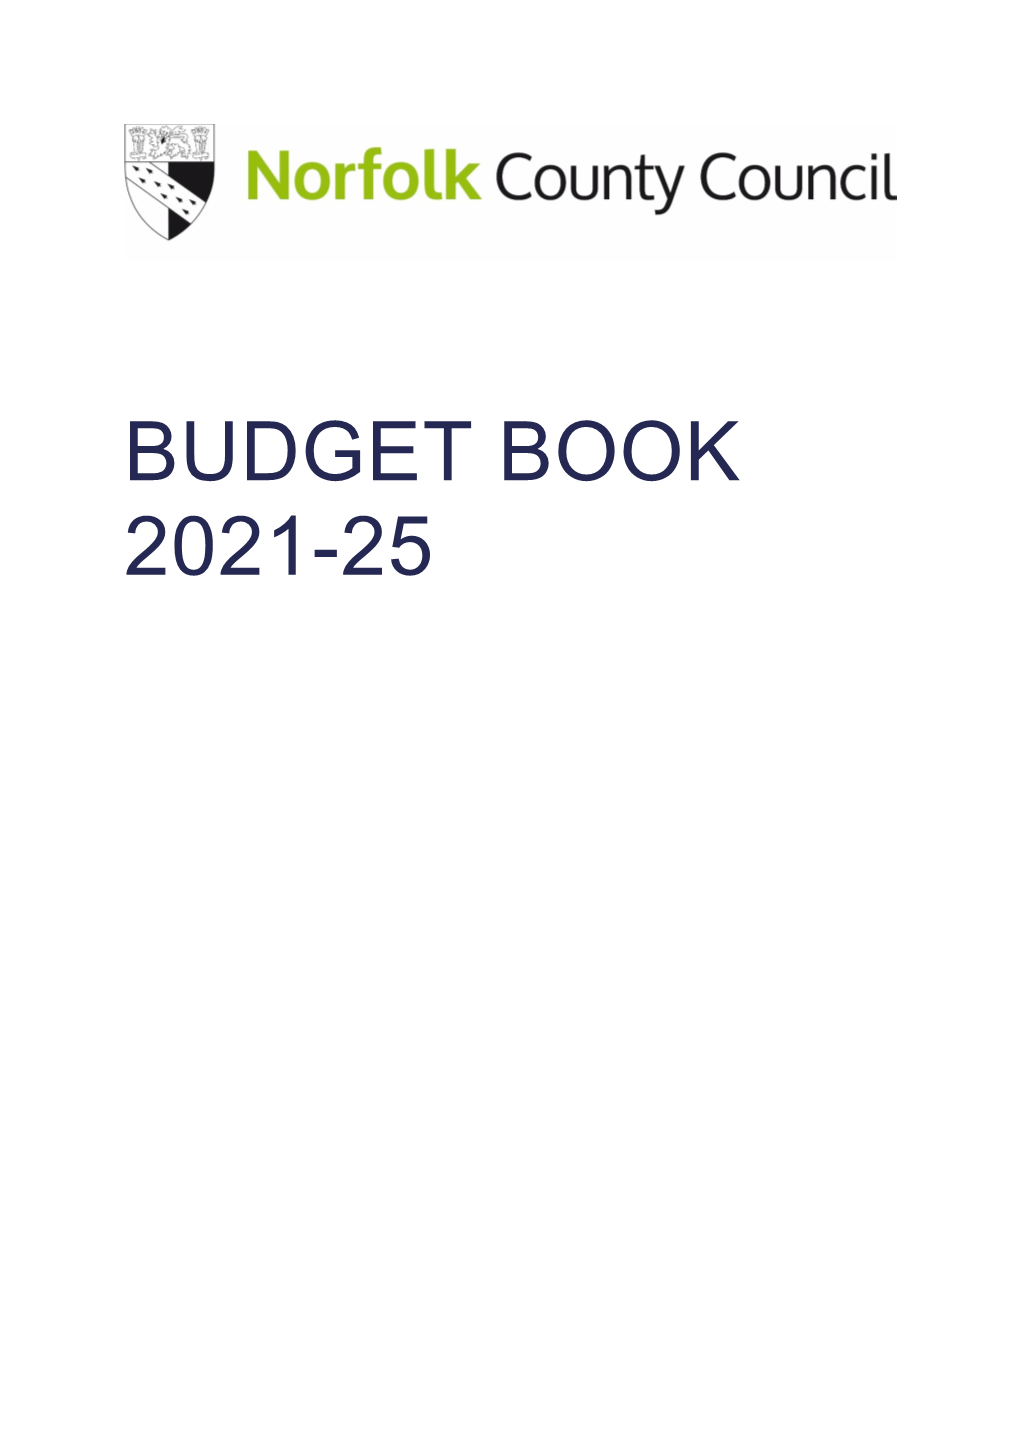 Budget Book 2021-25